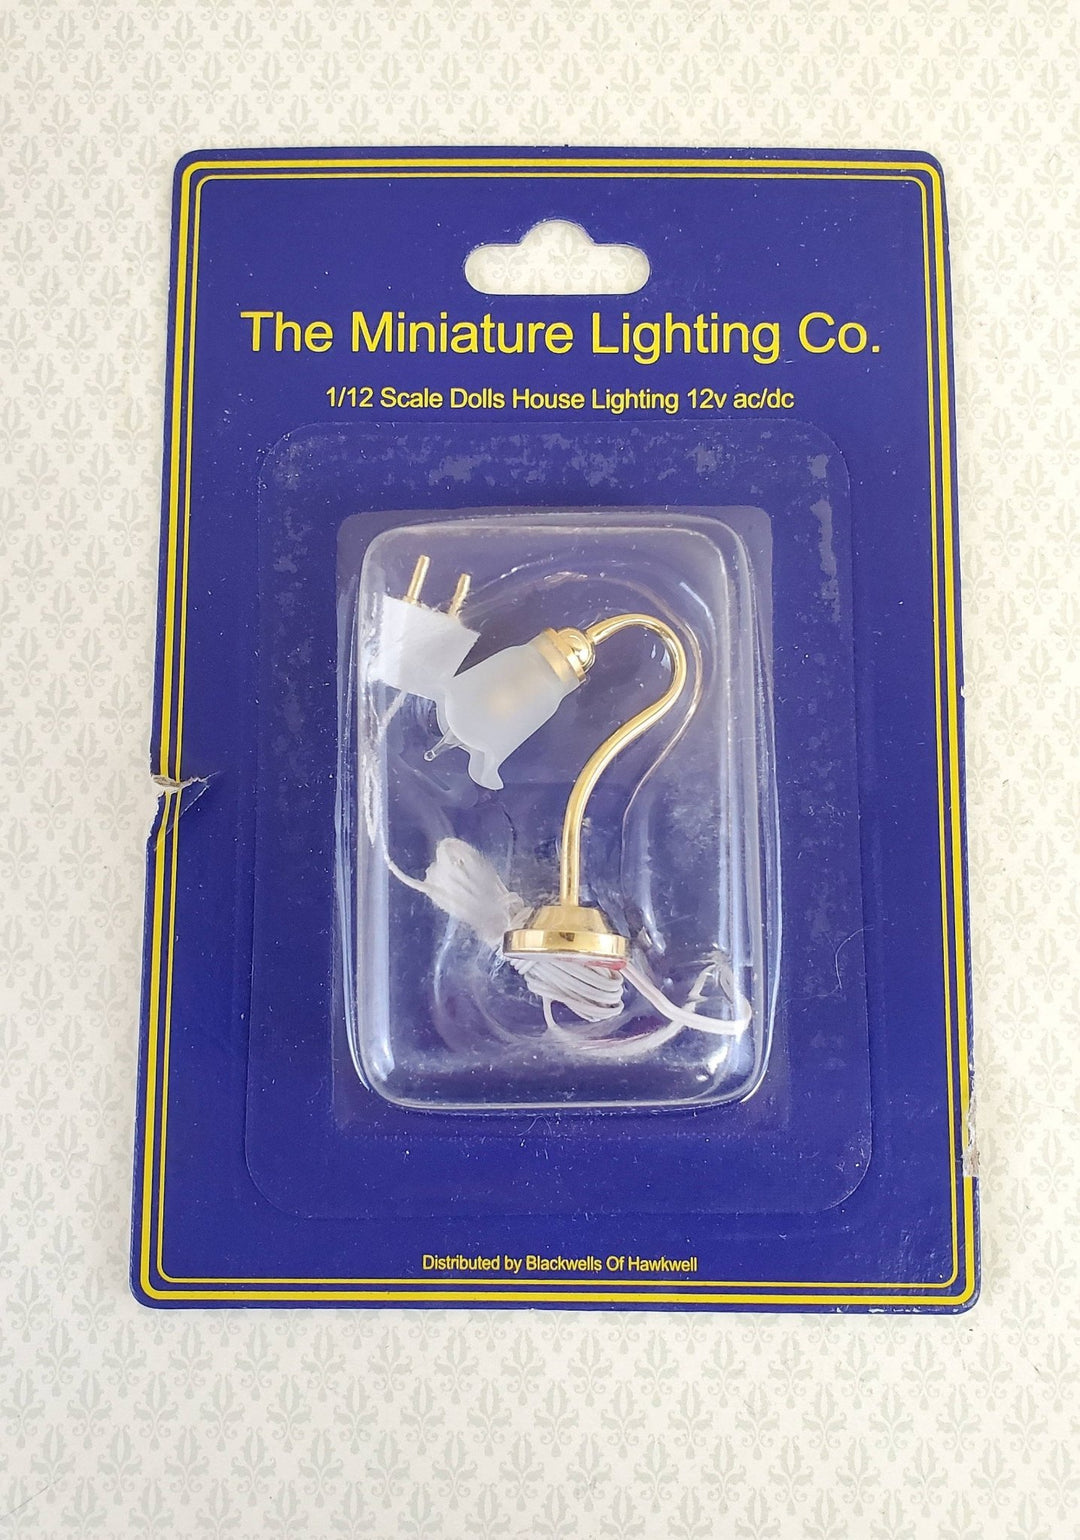 Dollhouse Miniature Tulip Desk Table Lamp Electric Light 1:12 Scale 12 Volt - Miniature Crush